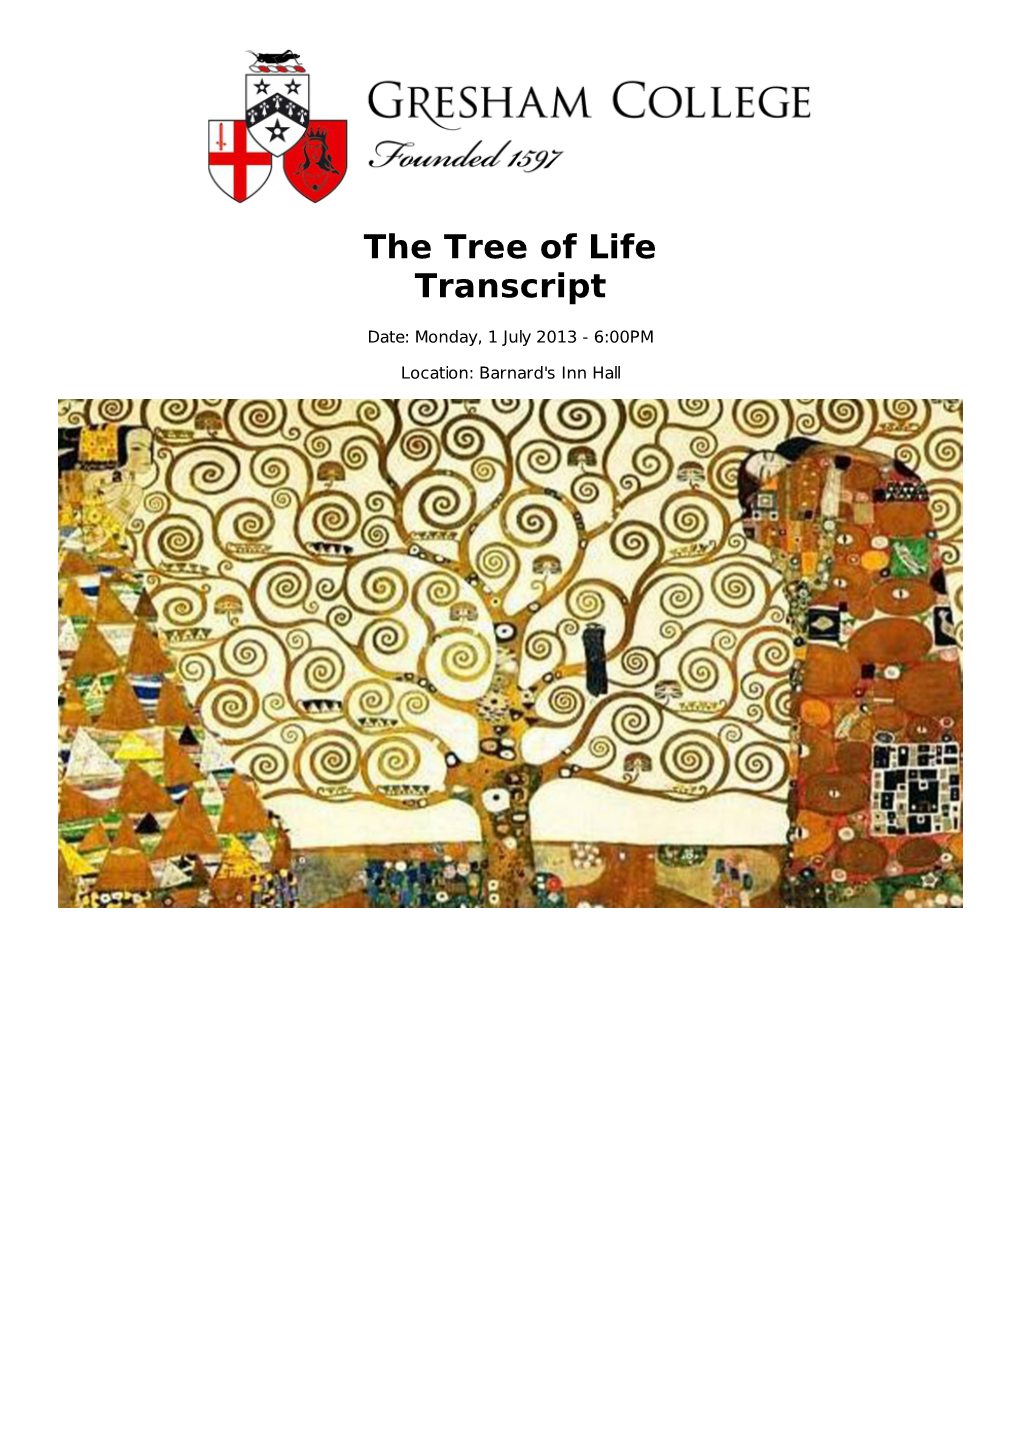 The Tree of Life Transcript